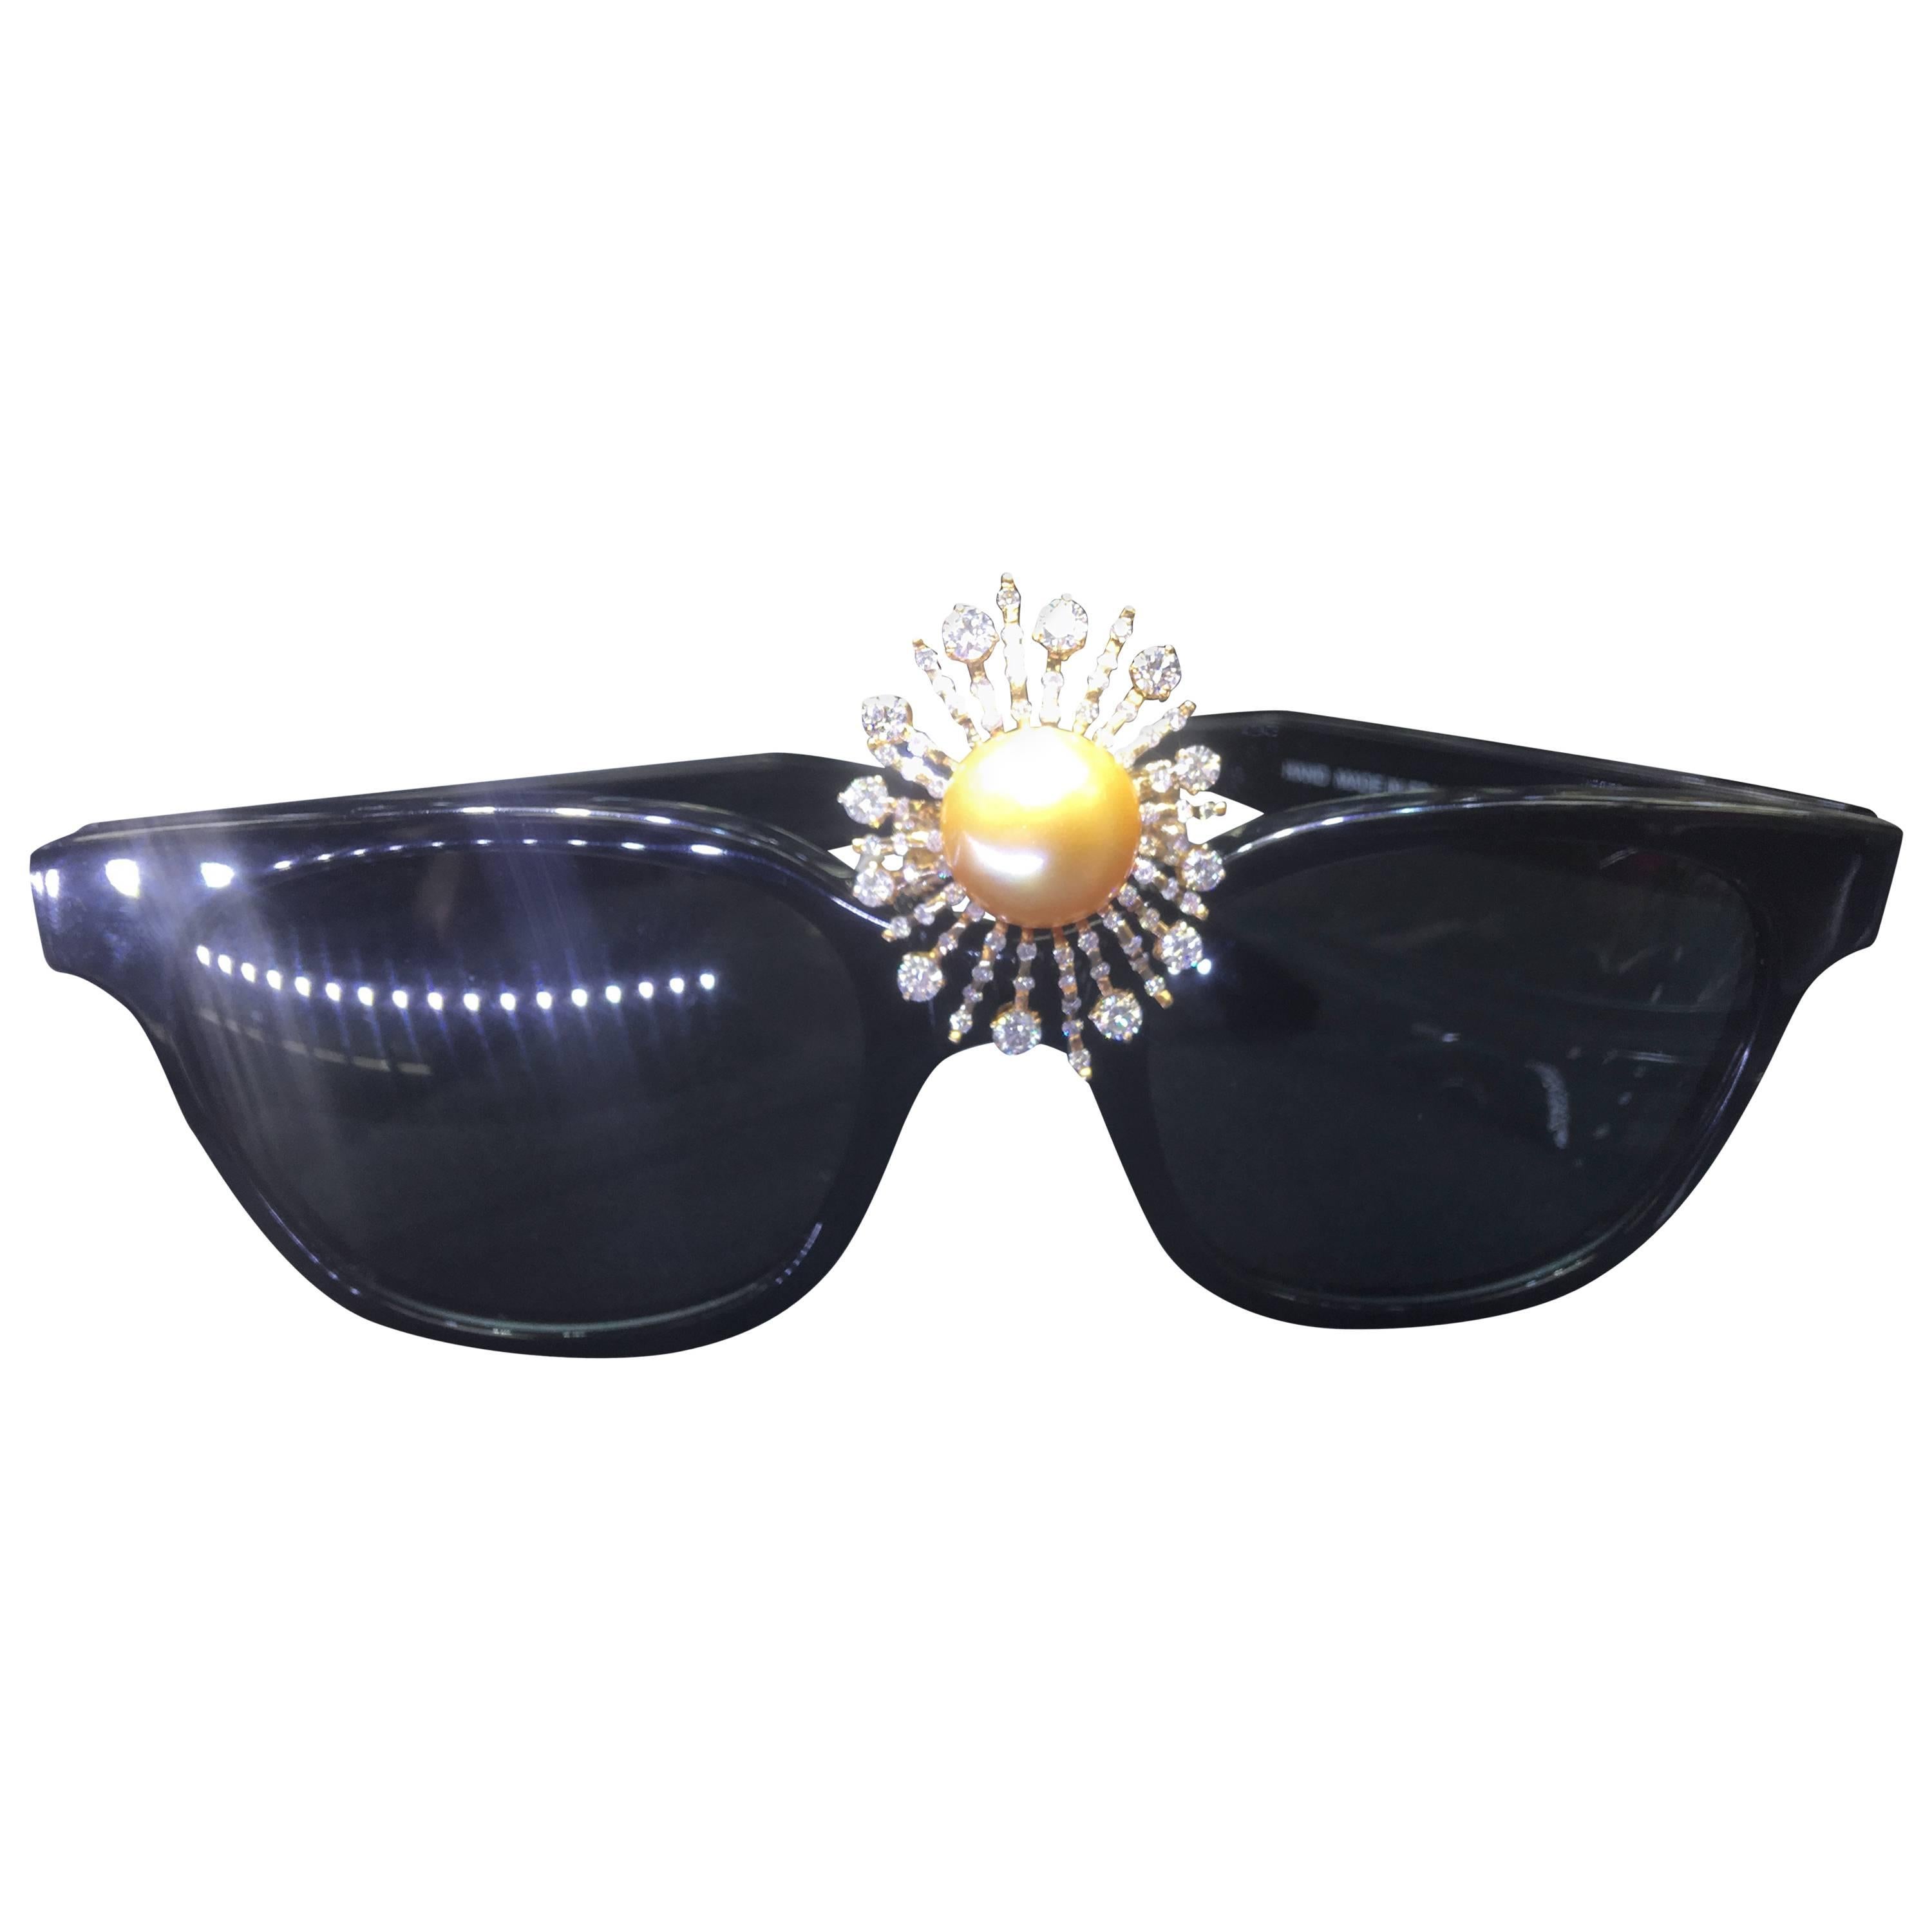 STACY ENGMAN ART ROYALTY -3.5 Carat Diamond Sunglasses-Tiara For Sale